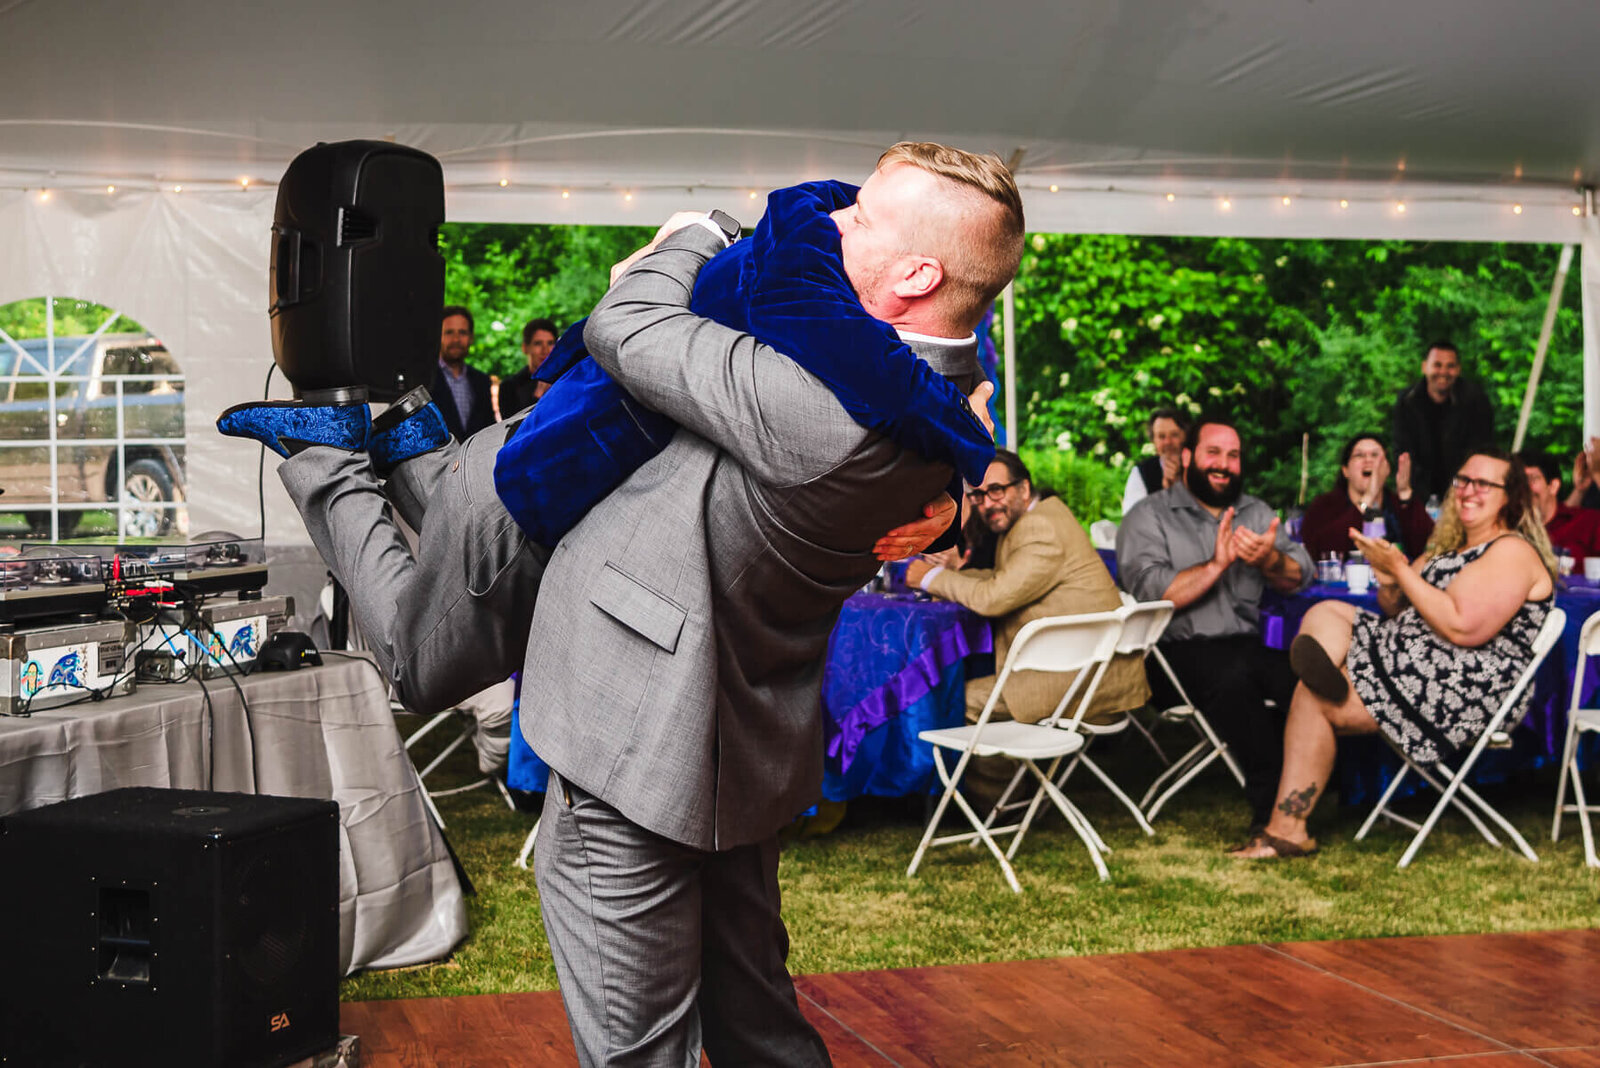 groomsmen lifting groom at wedding reception